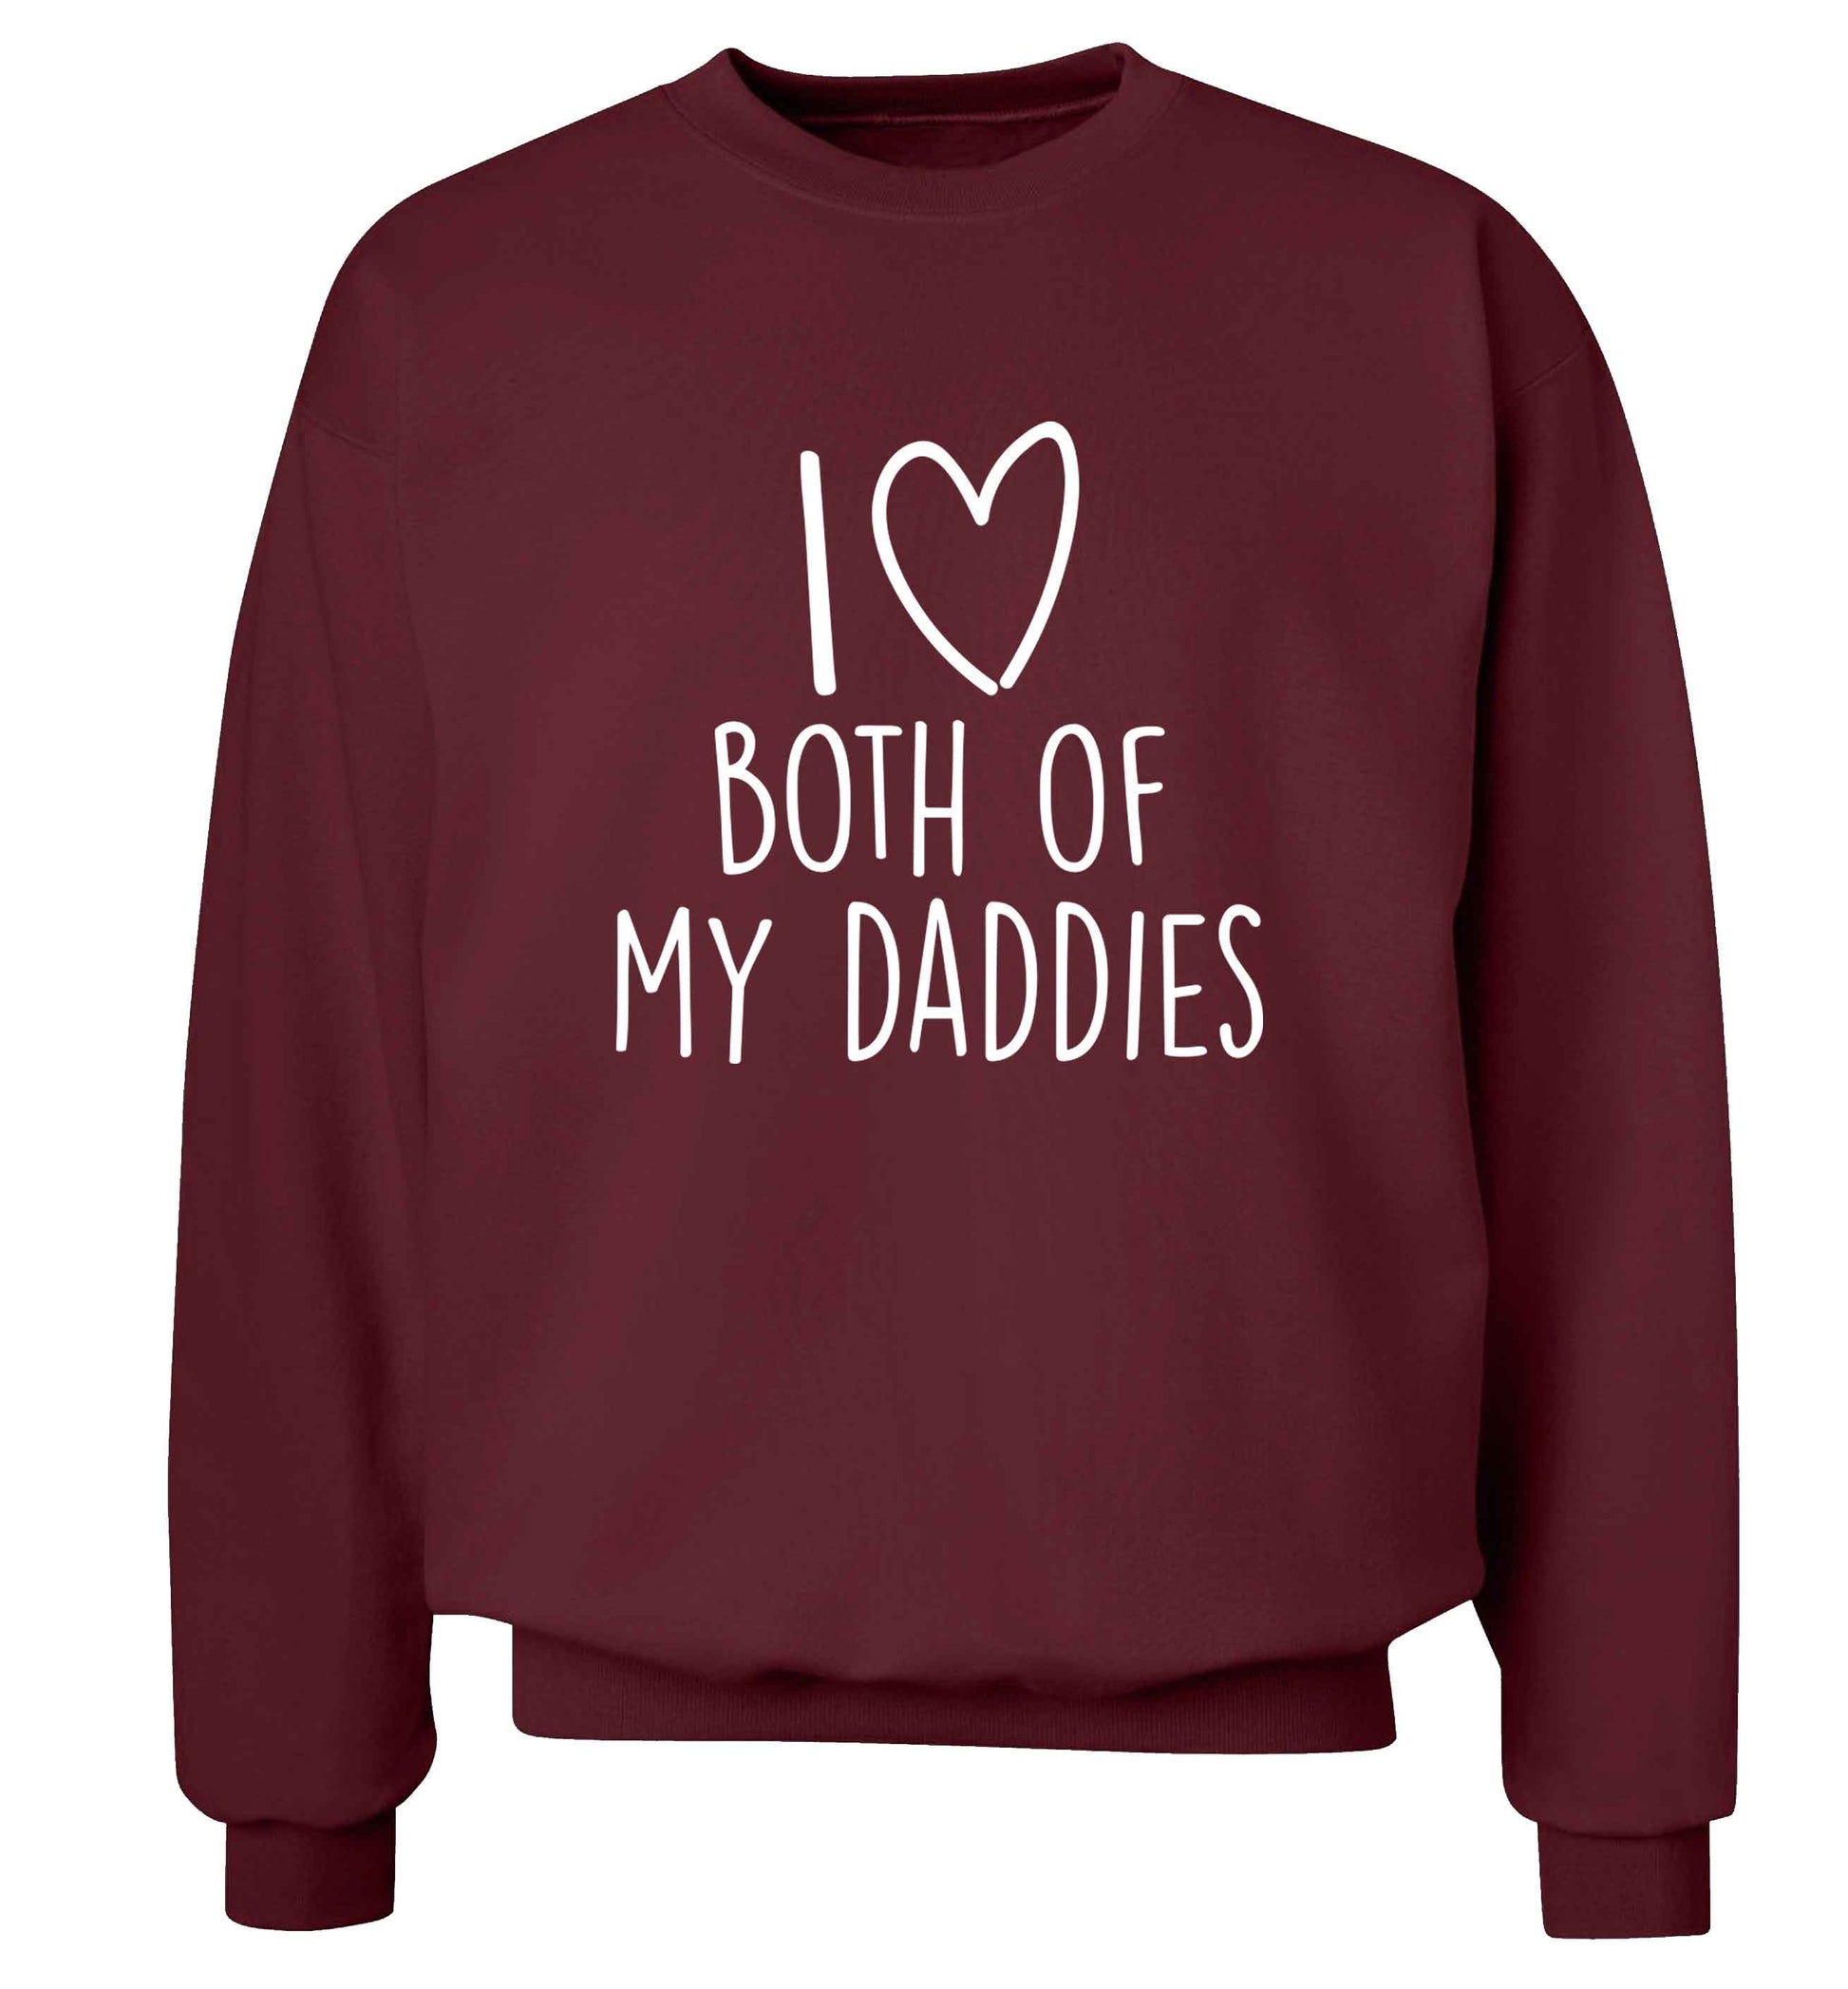 I love both of my daddies adult's unisex maroon sweater 2XL